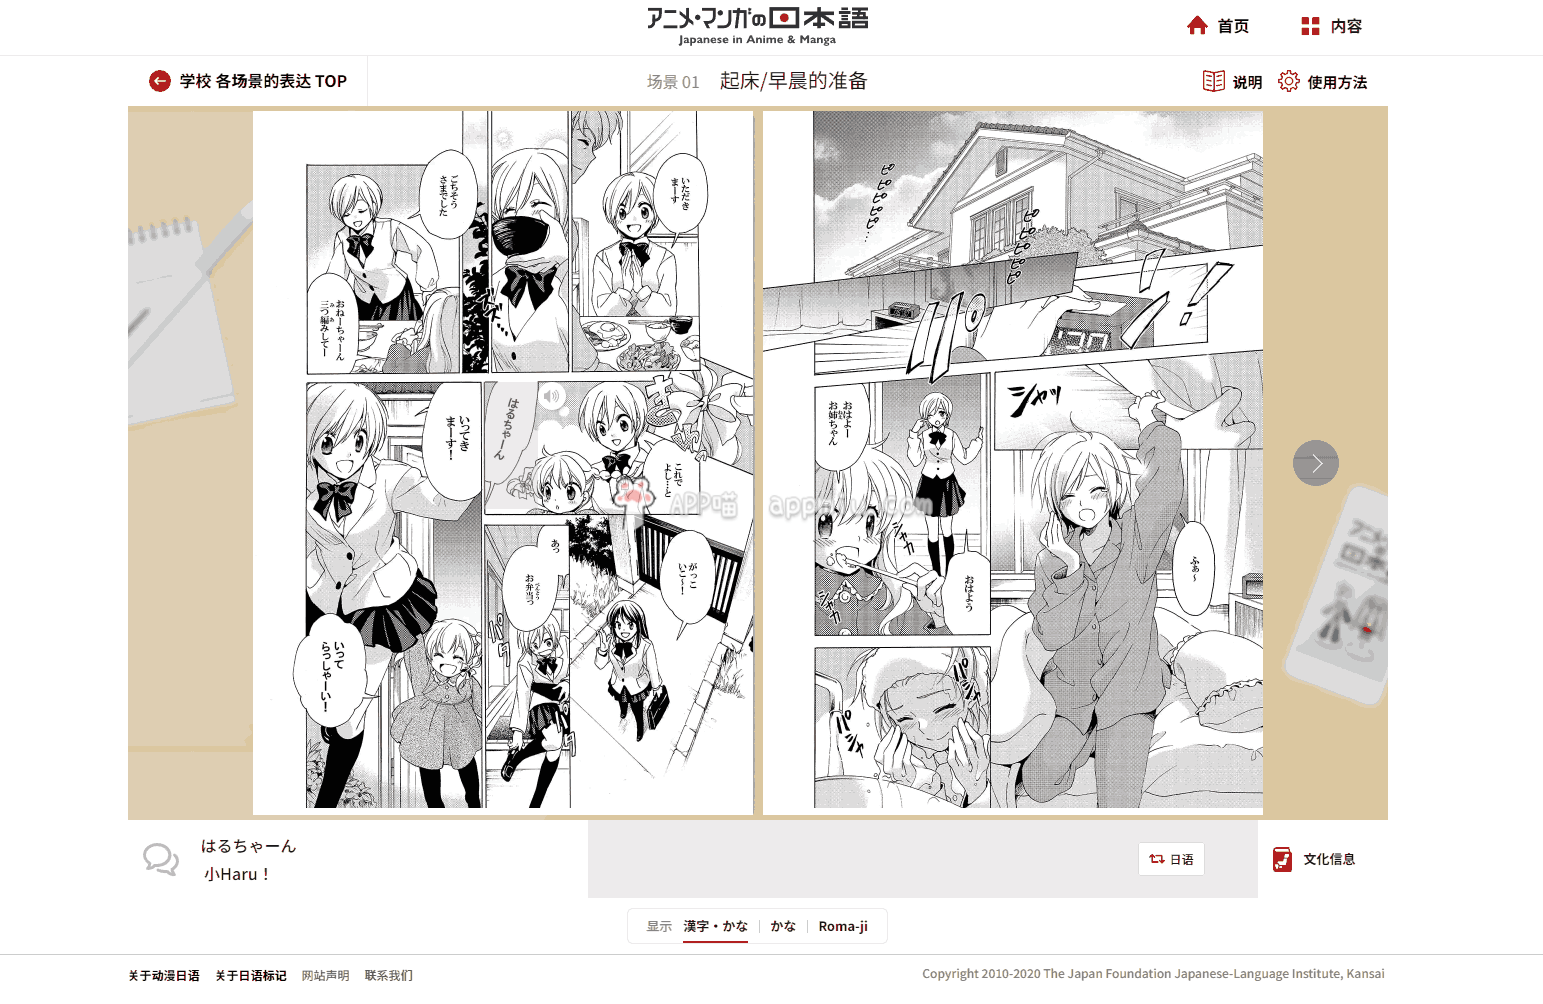 anime-manga日语学习动漫网站アニメ・マンガの日本語-APP喵：阿喵软件资源分享